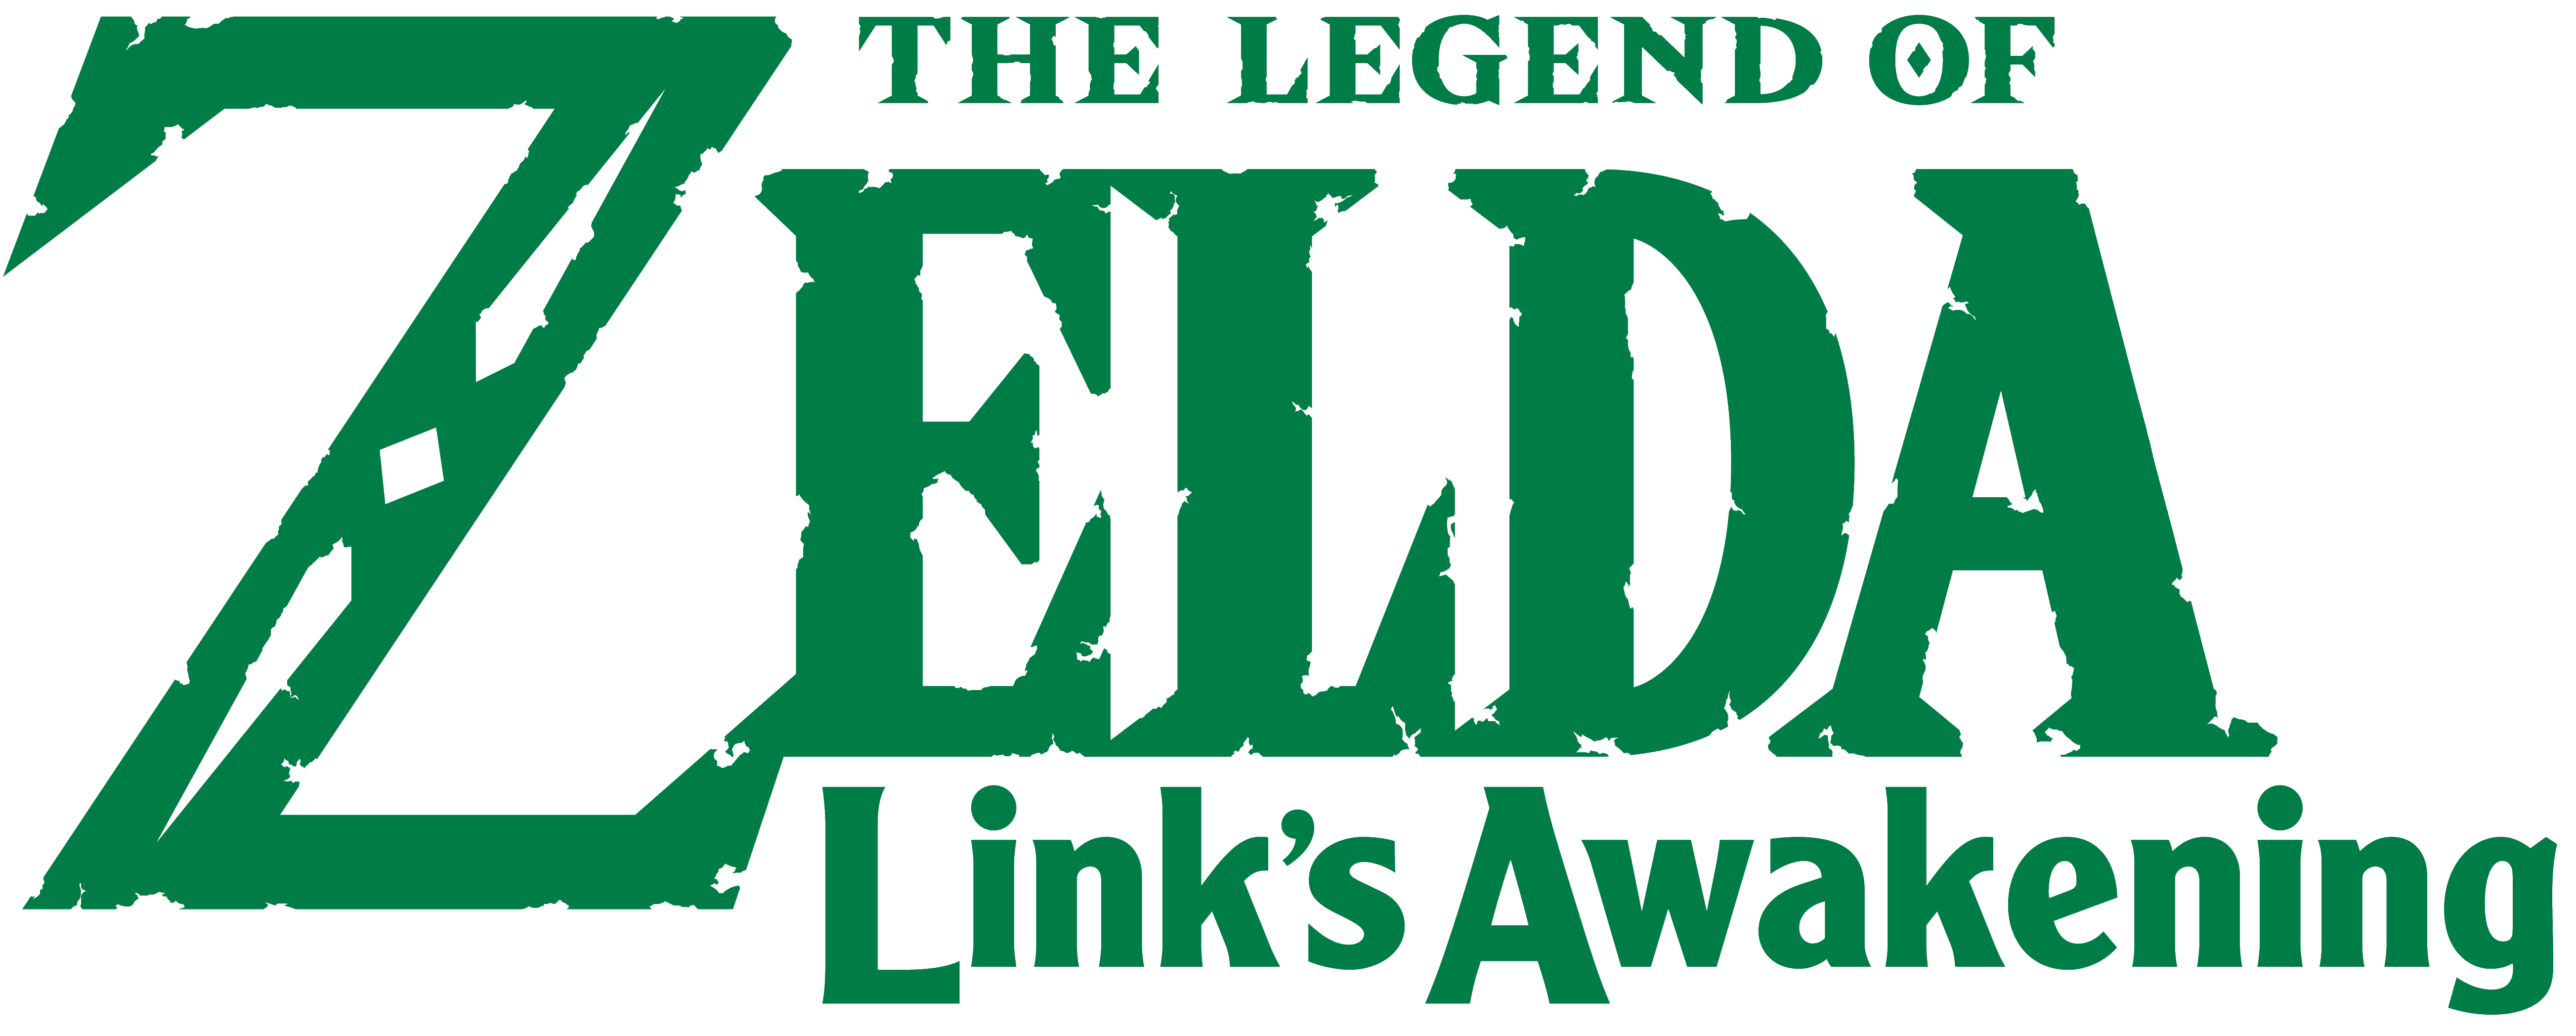 The Legend Of Zelda Logo PNG HD Quality